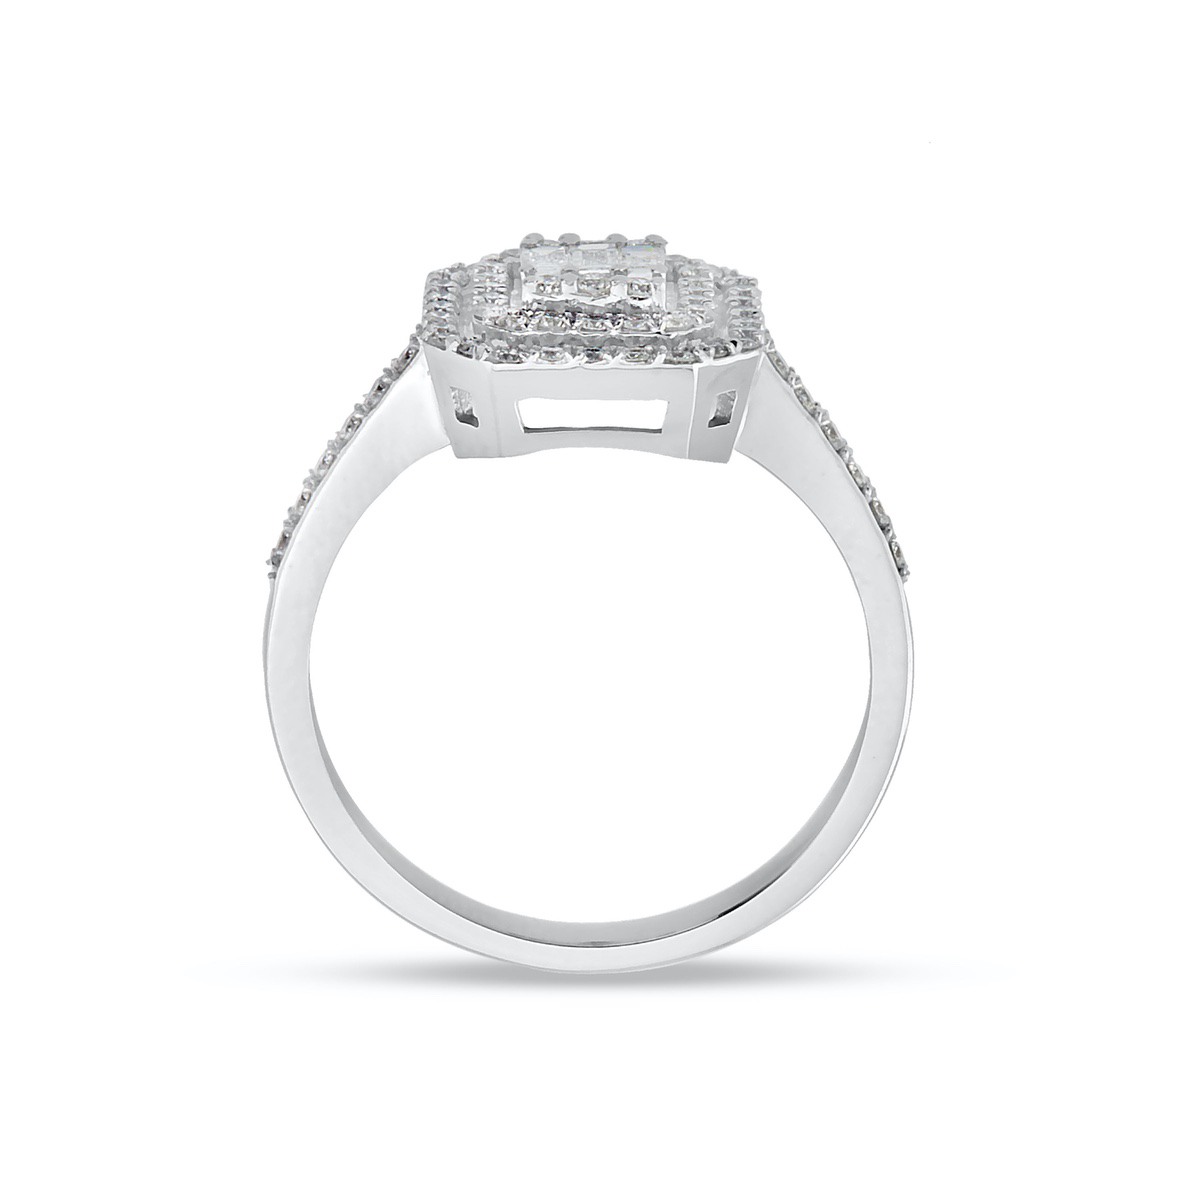 Phoenix Diamond Ring | Buy diamond rings online at rinayra.com